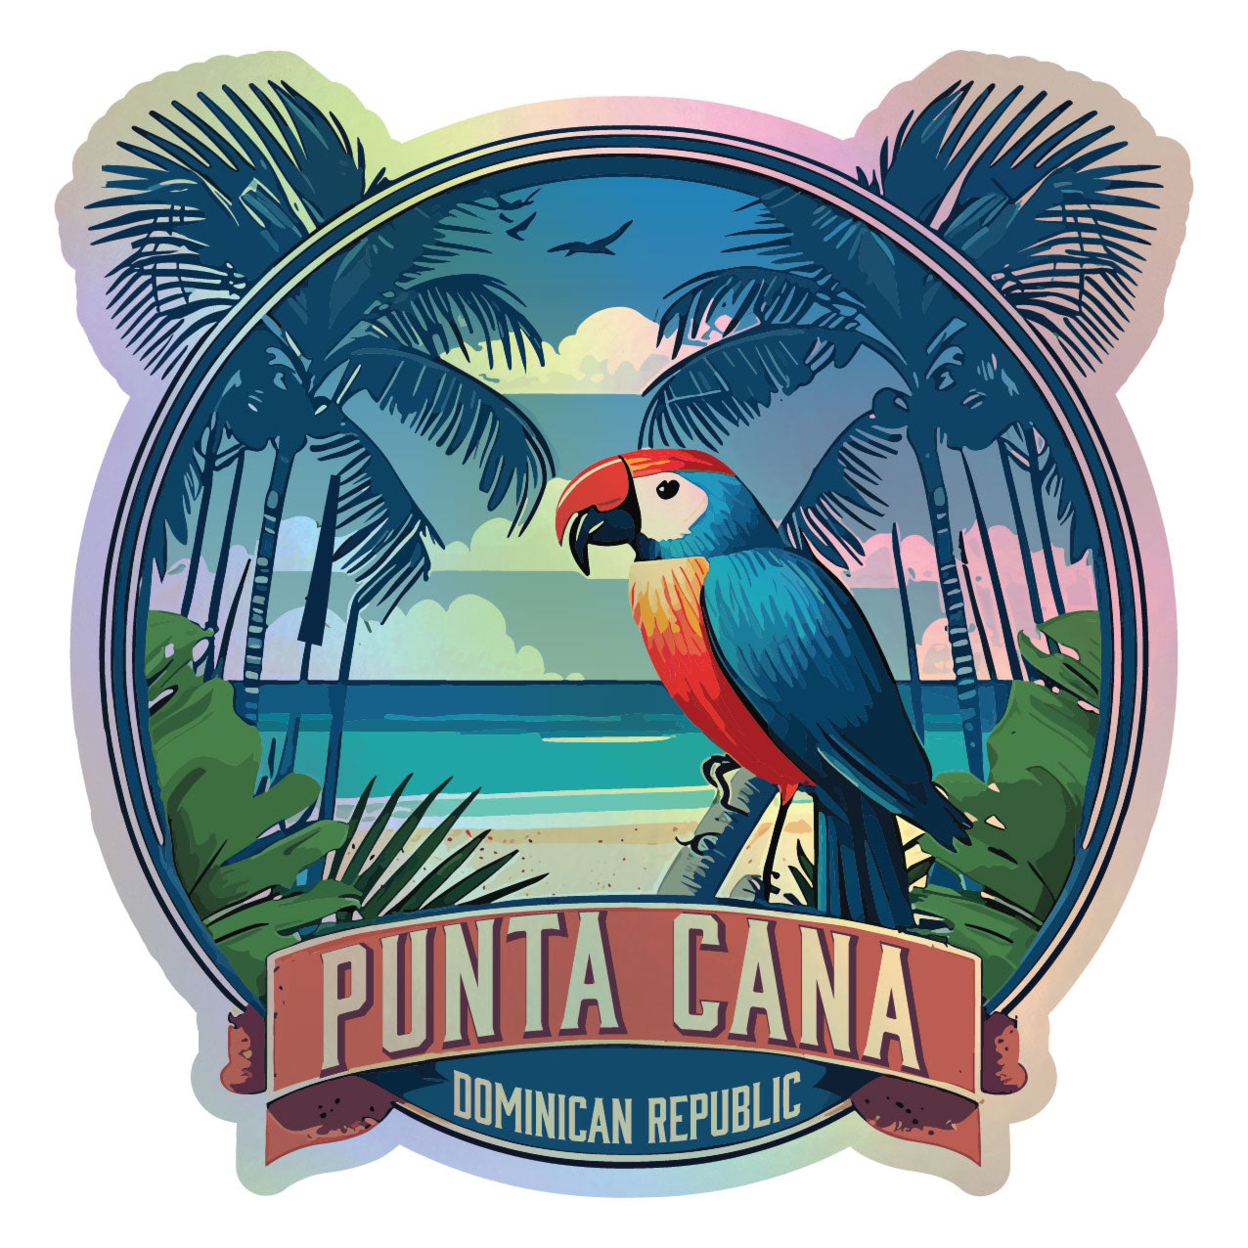 Punta Cana Dominican Republic Holographic Souvenir Vinyl Decal Sticker Parrot Design - 4 Inch